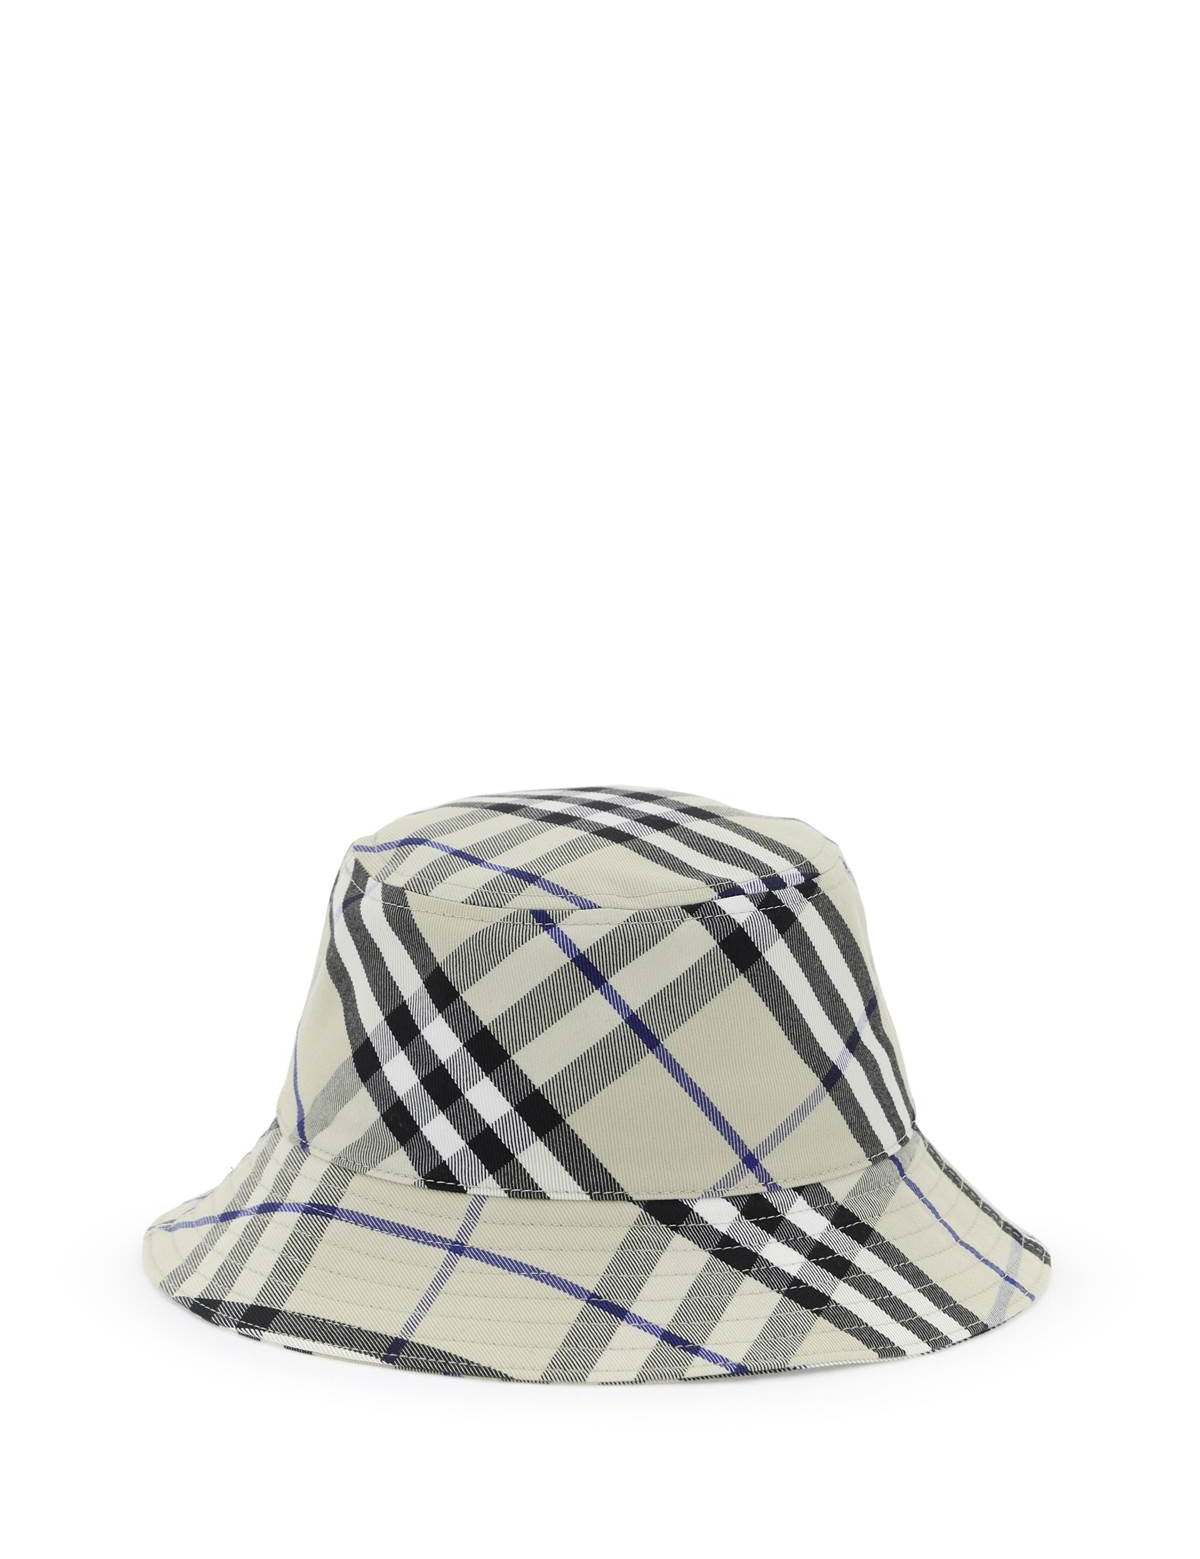 burberry-ered-cotton-blend-bucket-hat-with-nine-words_01feeff5-cf02-45ff-bc5a-2ac406433b8d.jpg